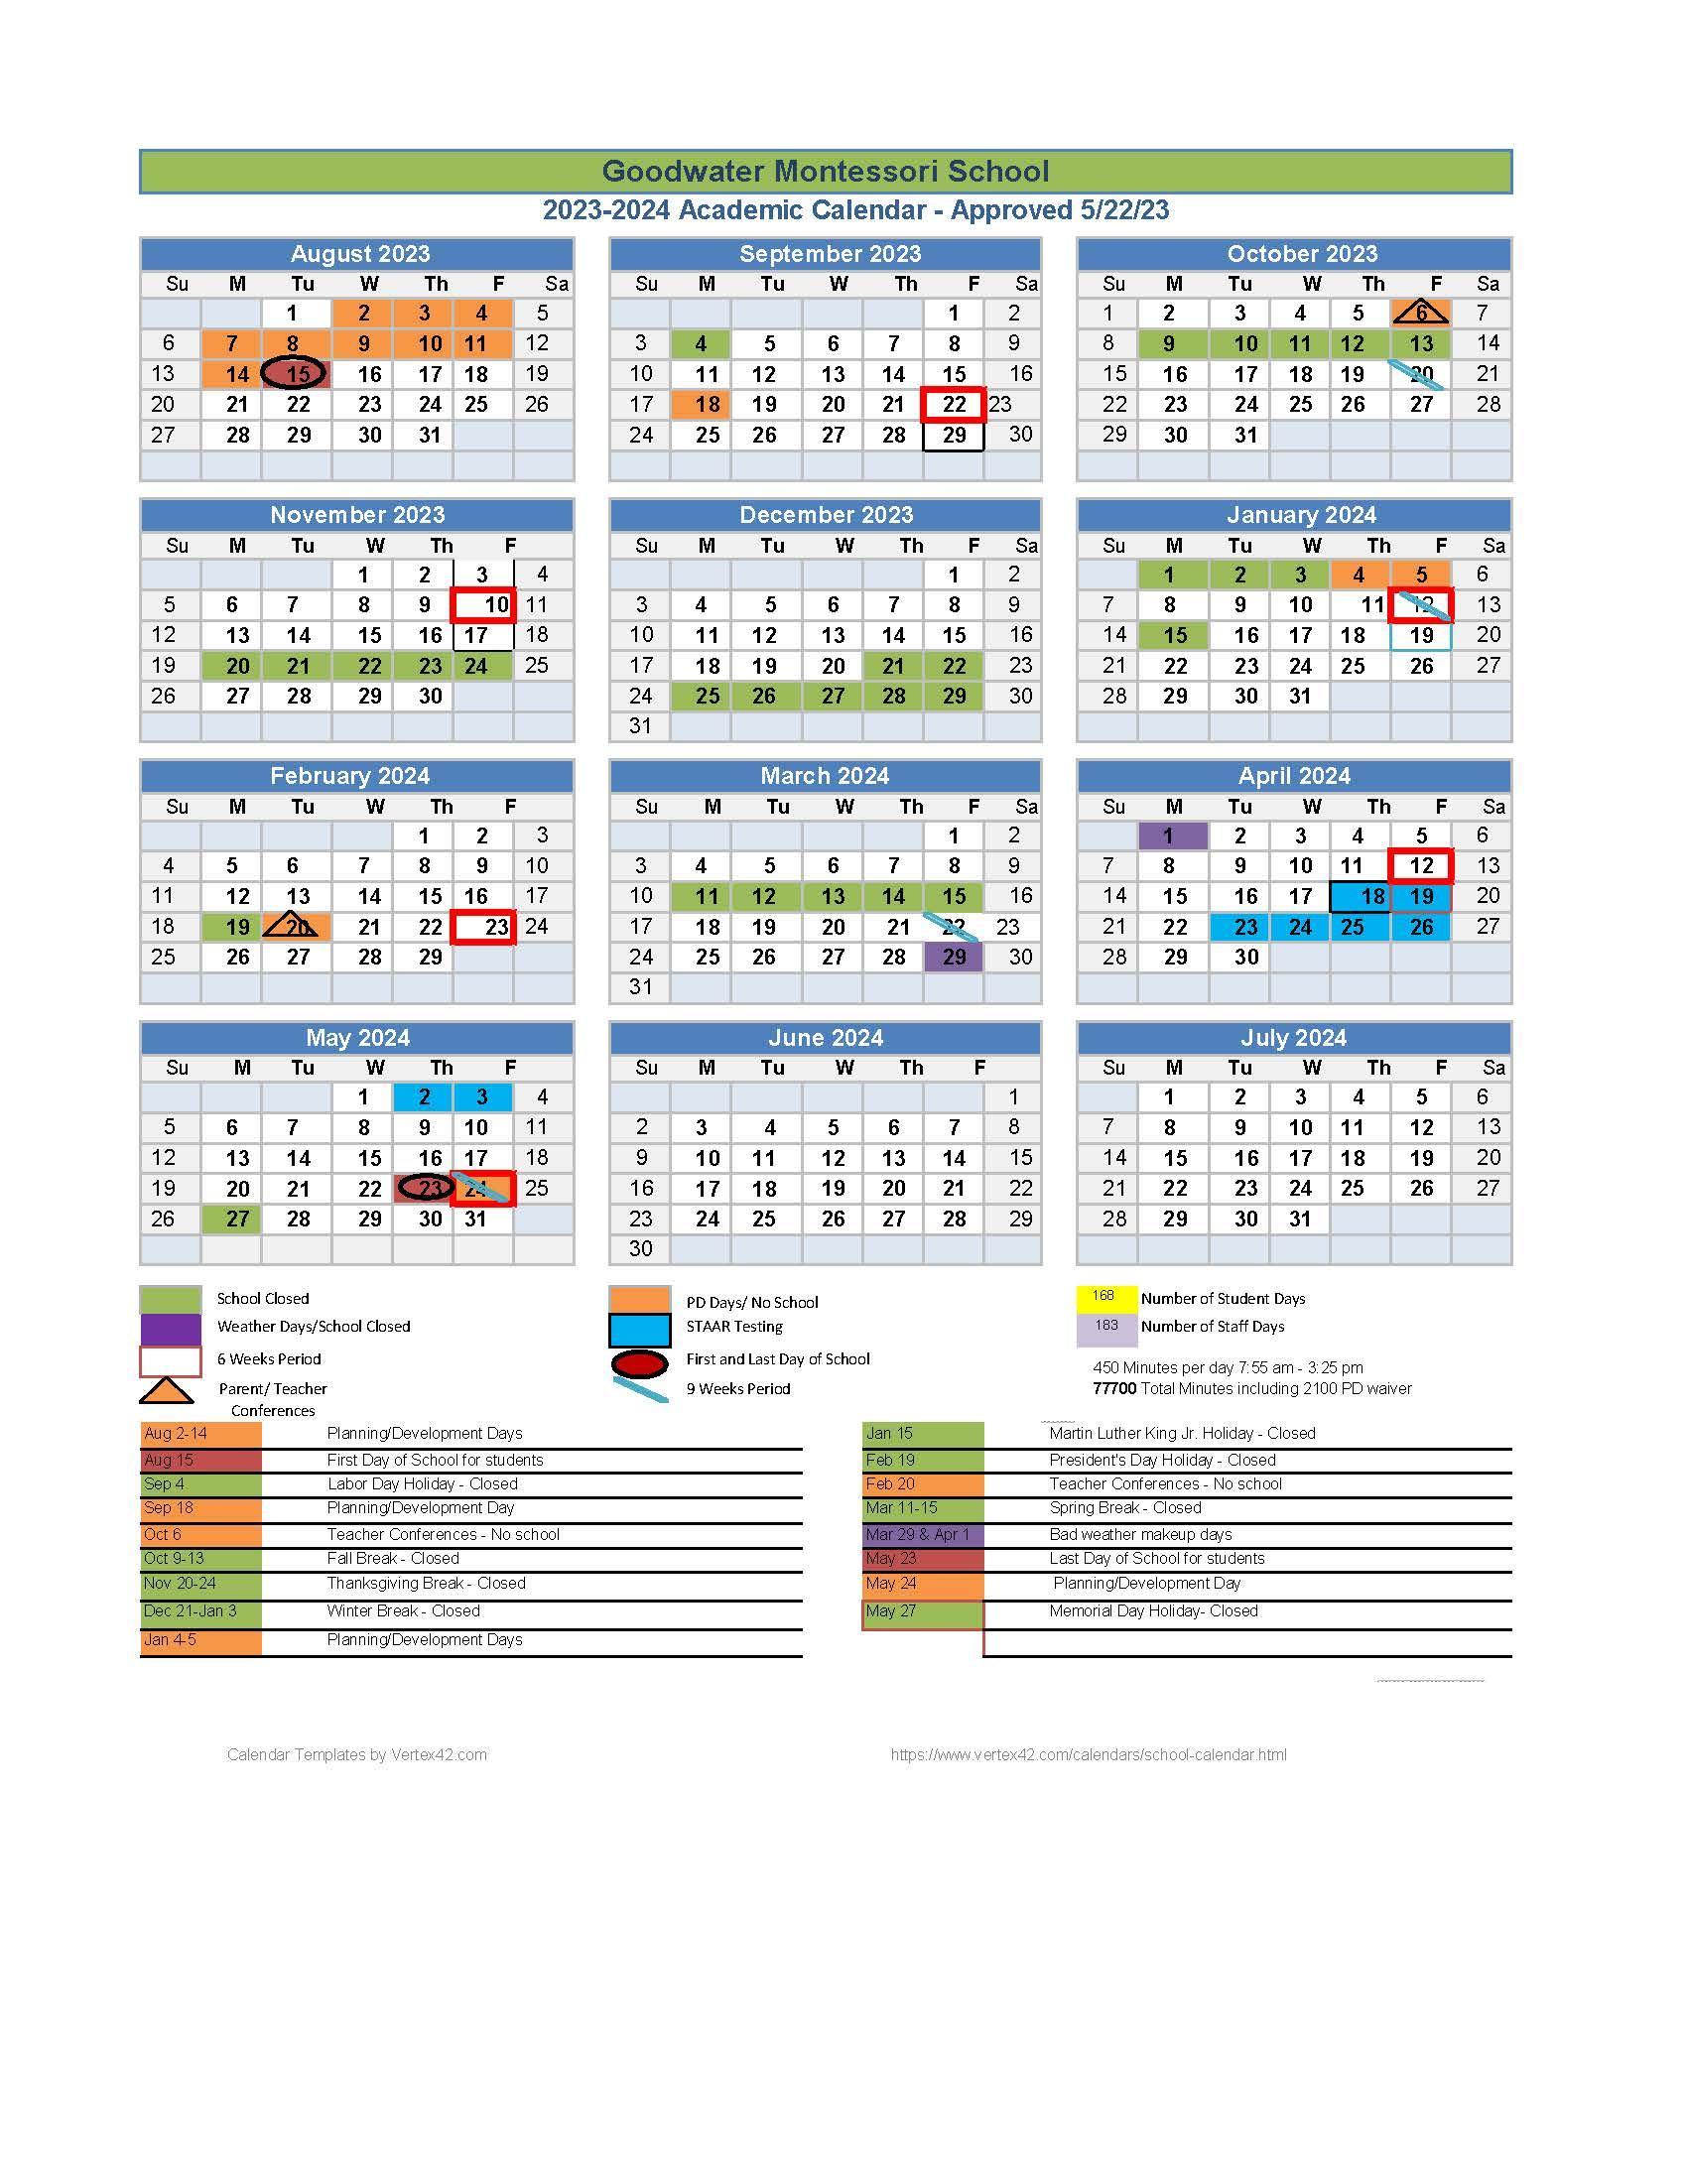 20232024 Academic Calendar Goodwater Montessori Public Charter School